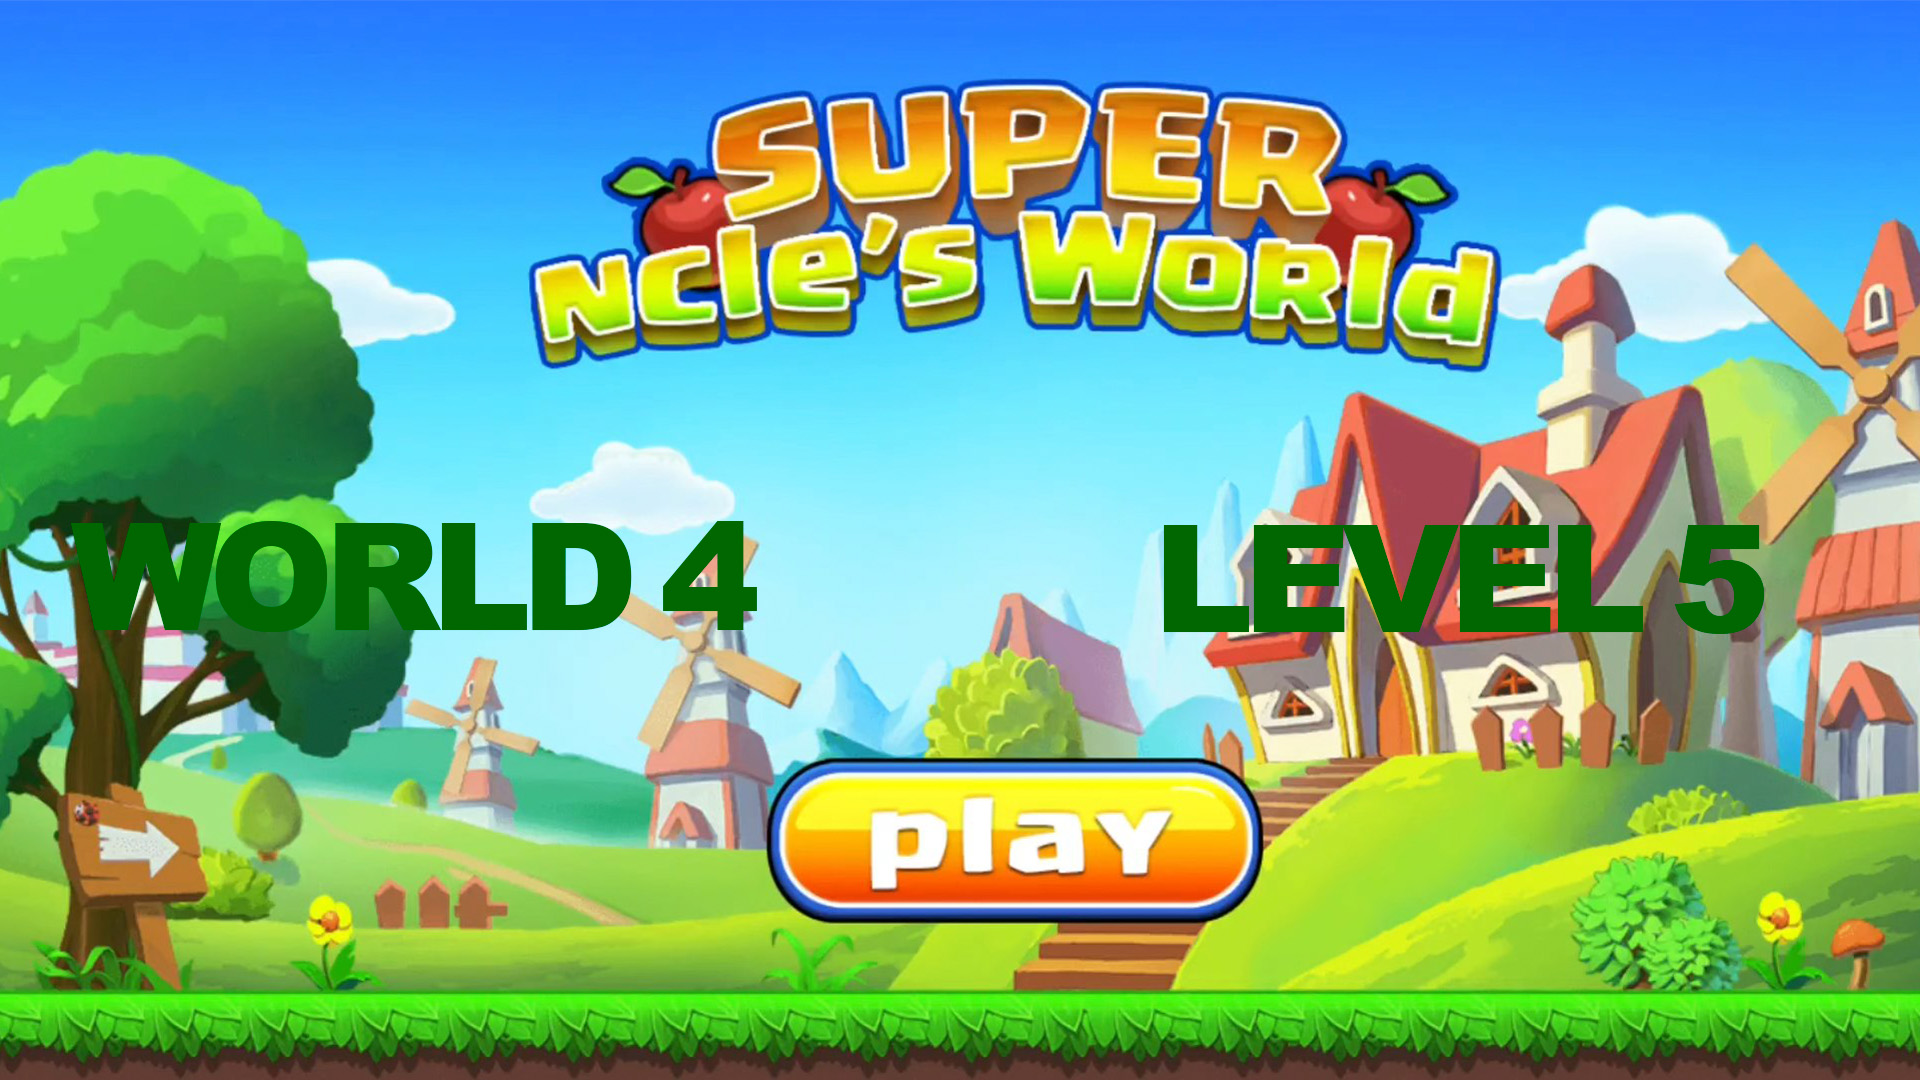 Super ncle's  World 4. Level 5.